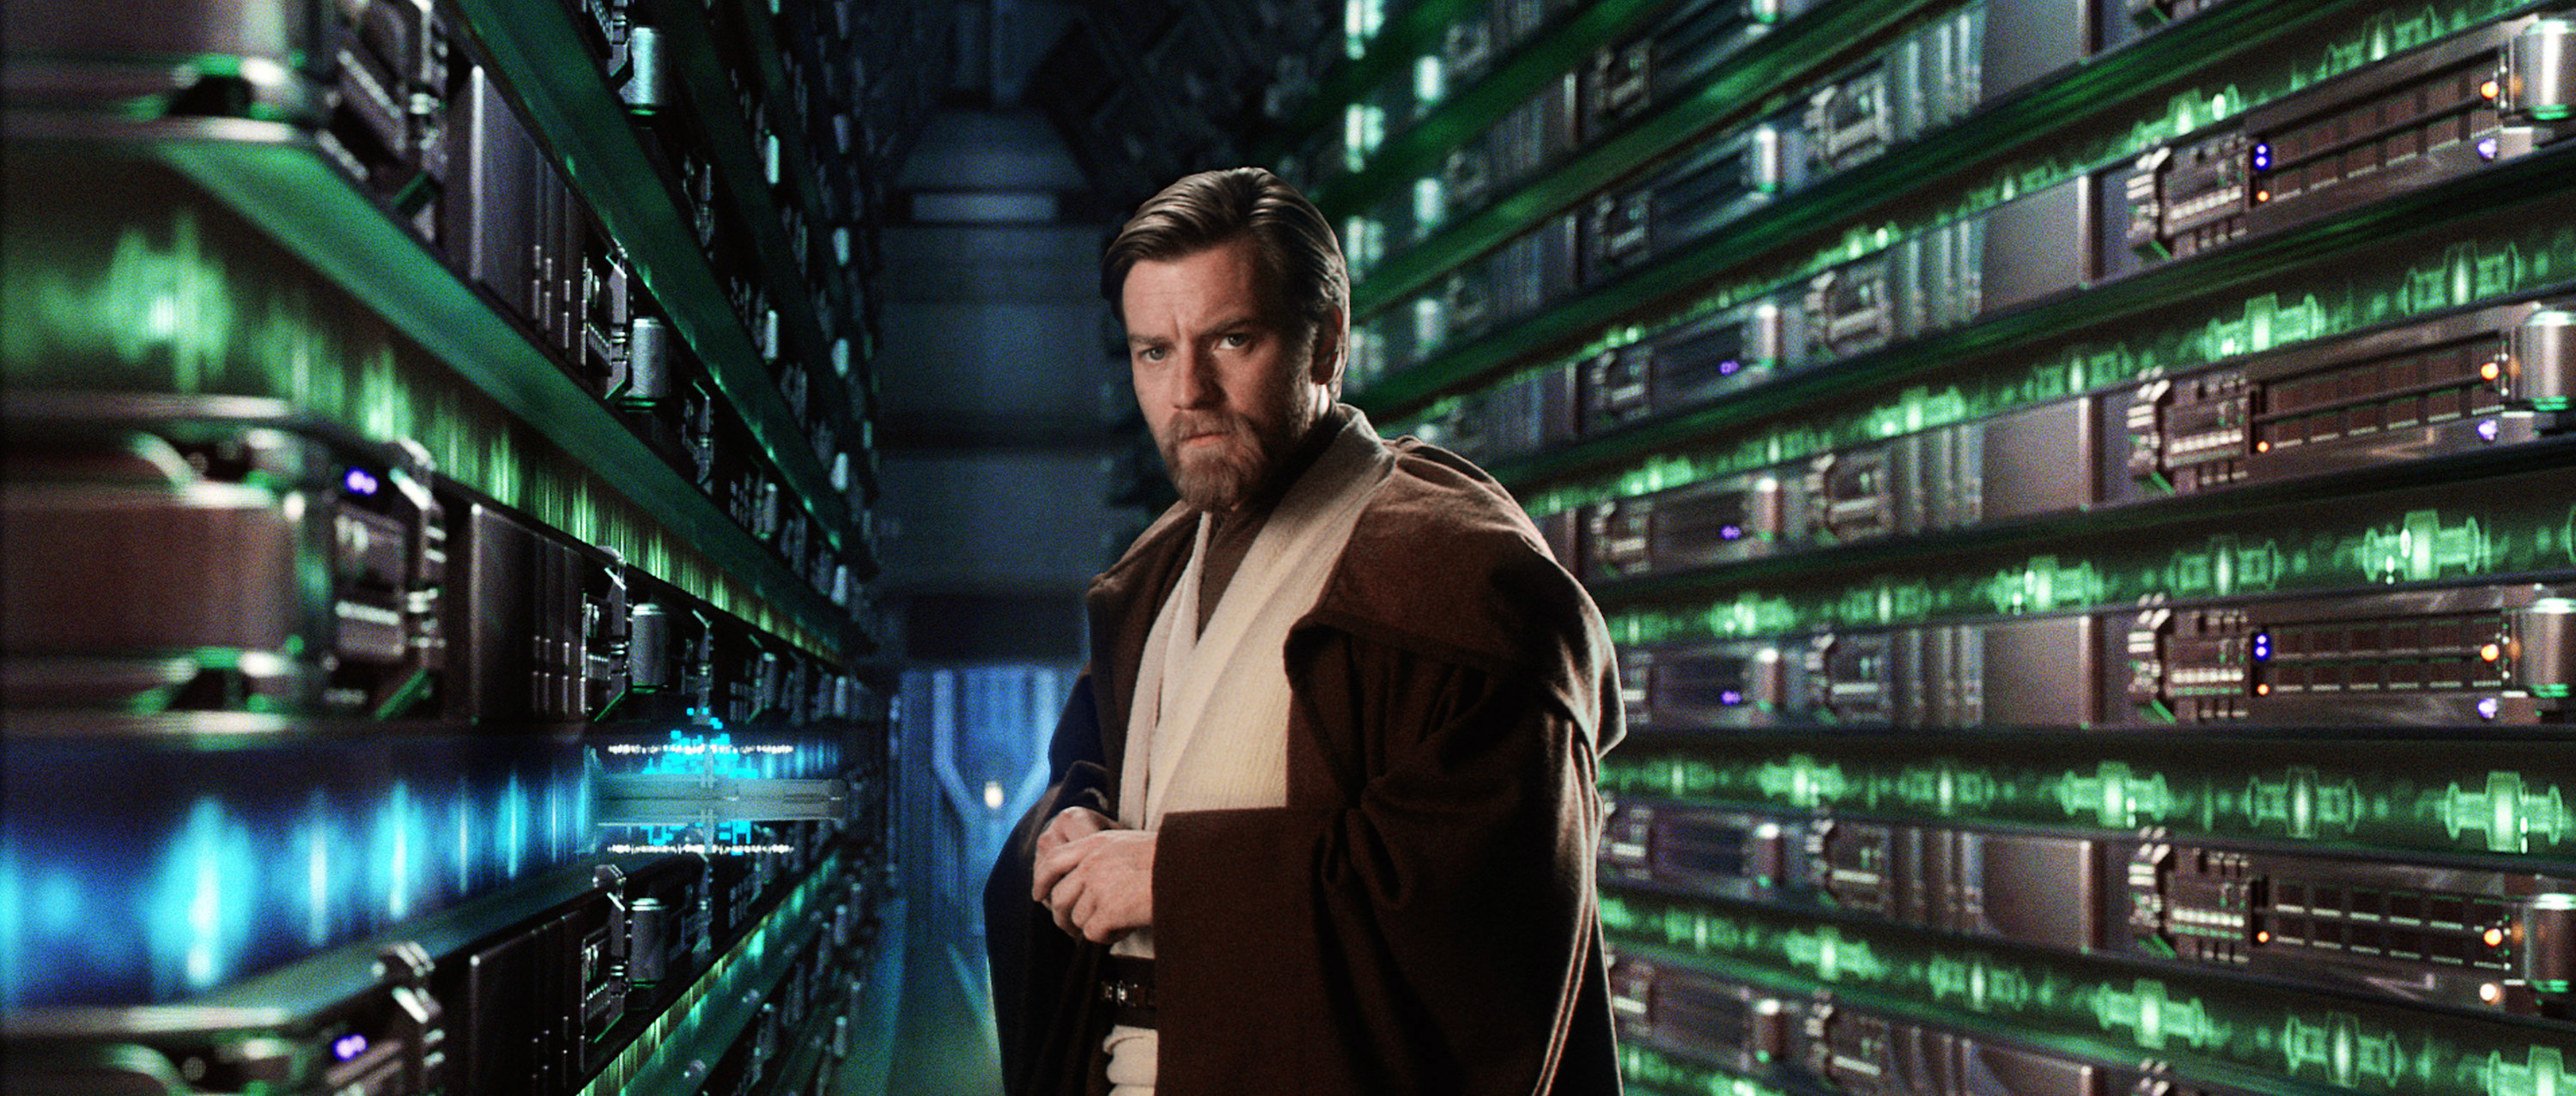 Ewan with a beard as Obi-Wan